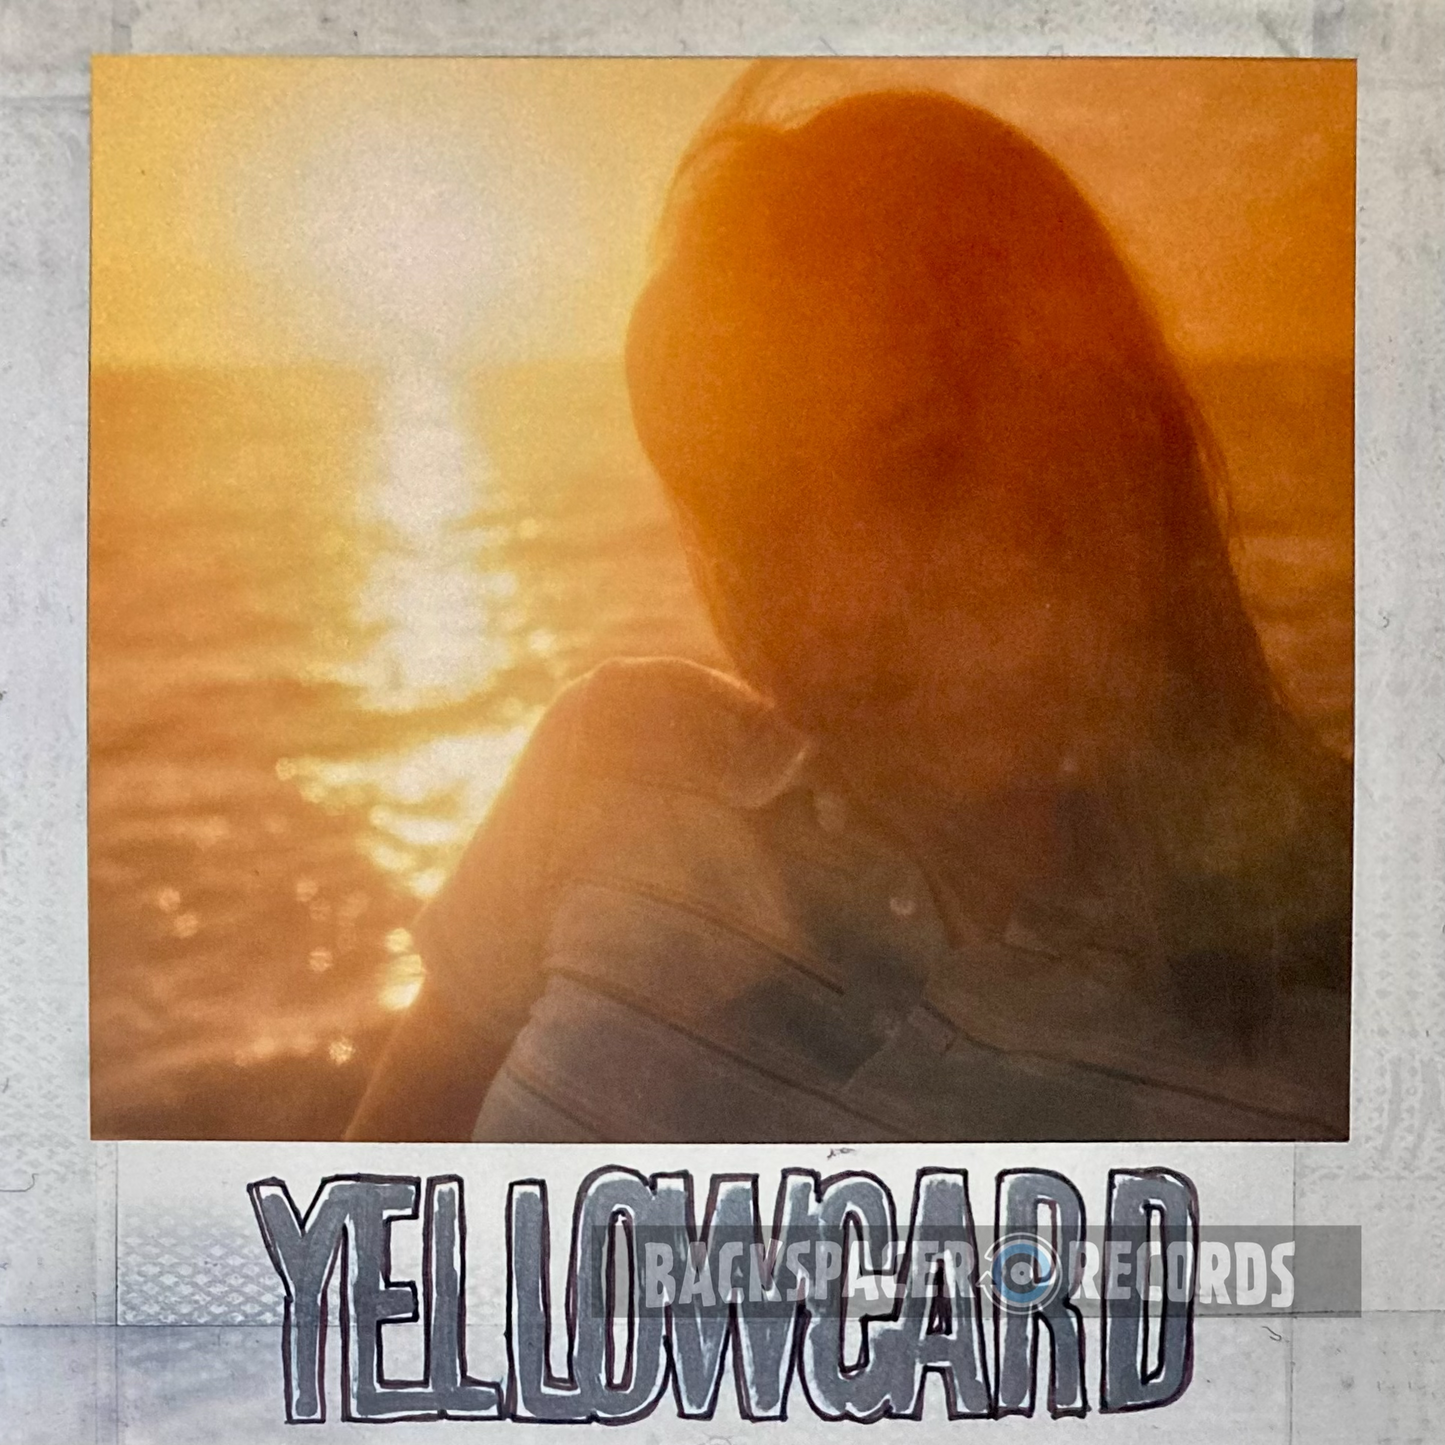 Yellowcard - Ocean Avenue LP (Sealed)